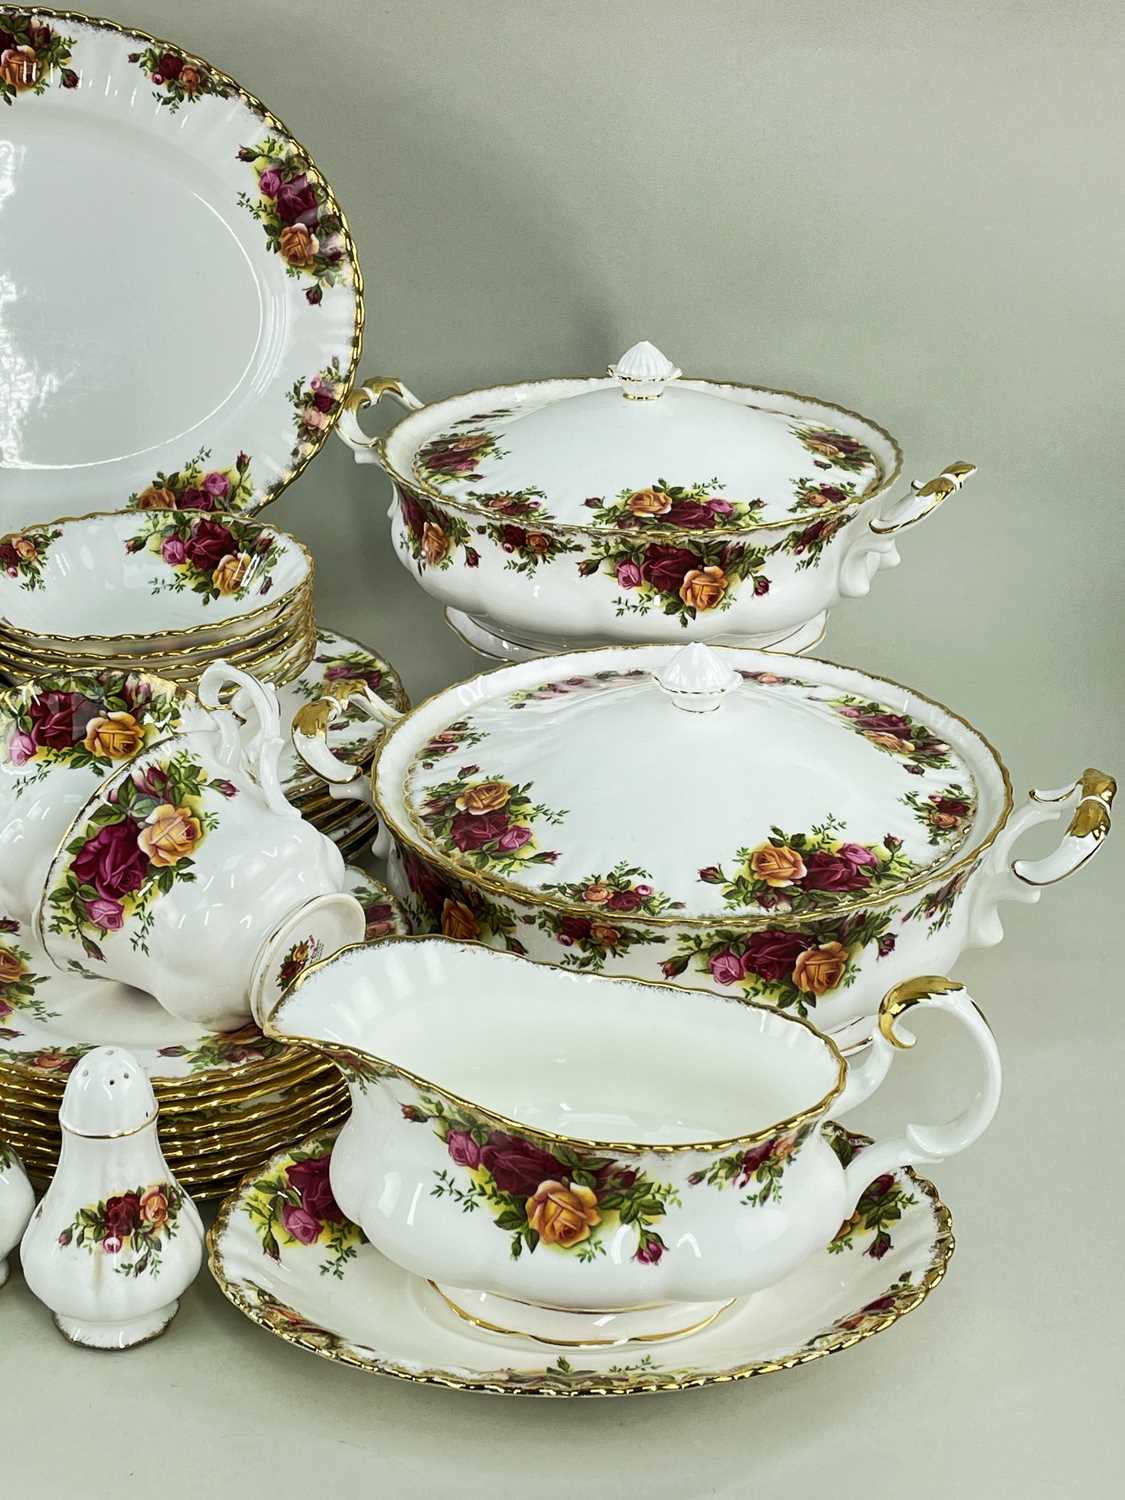 ROYAL ALBERT 'OLD COUNTRY ROSES' TEA & DINNER SERVICE, including teapot, sugar bowl, milk jug, bread - Image 2 of 5